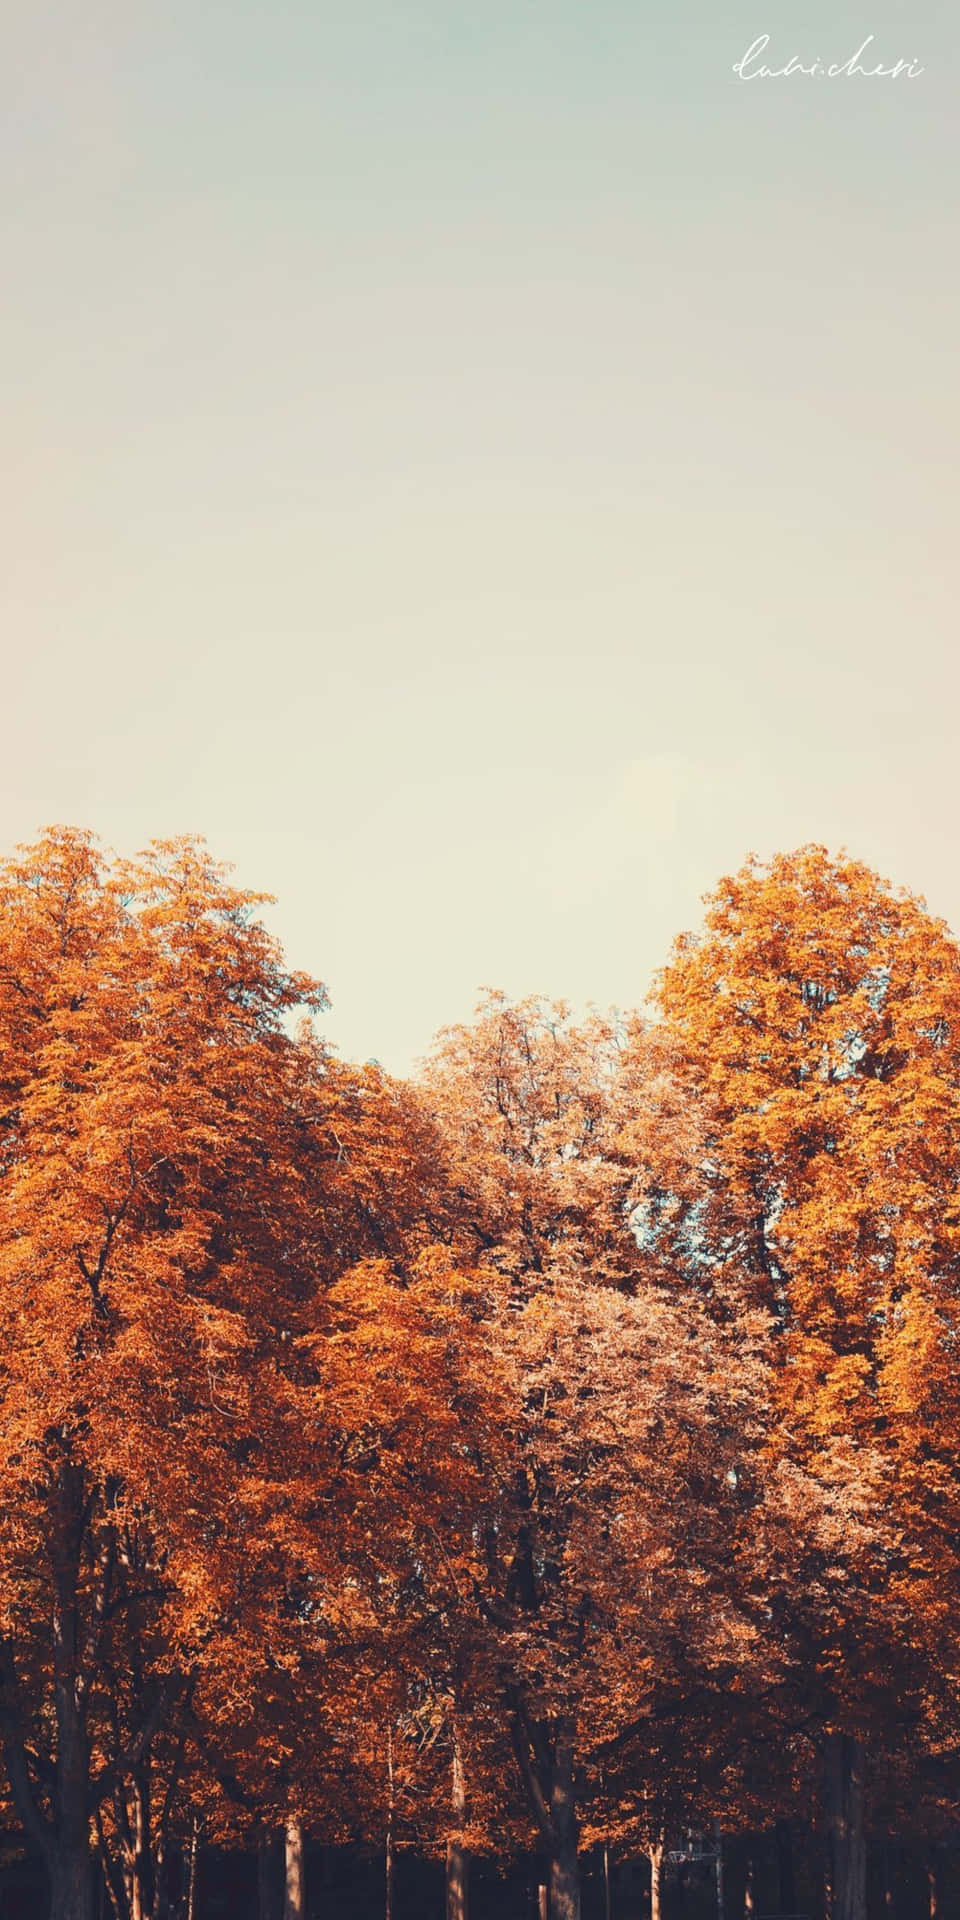 Pixel 3 Fall Orange Trees Clear Sky Background